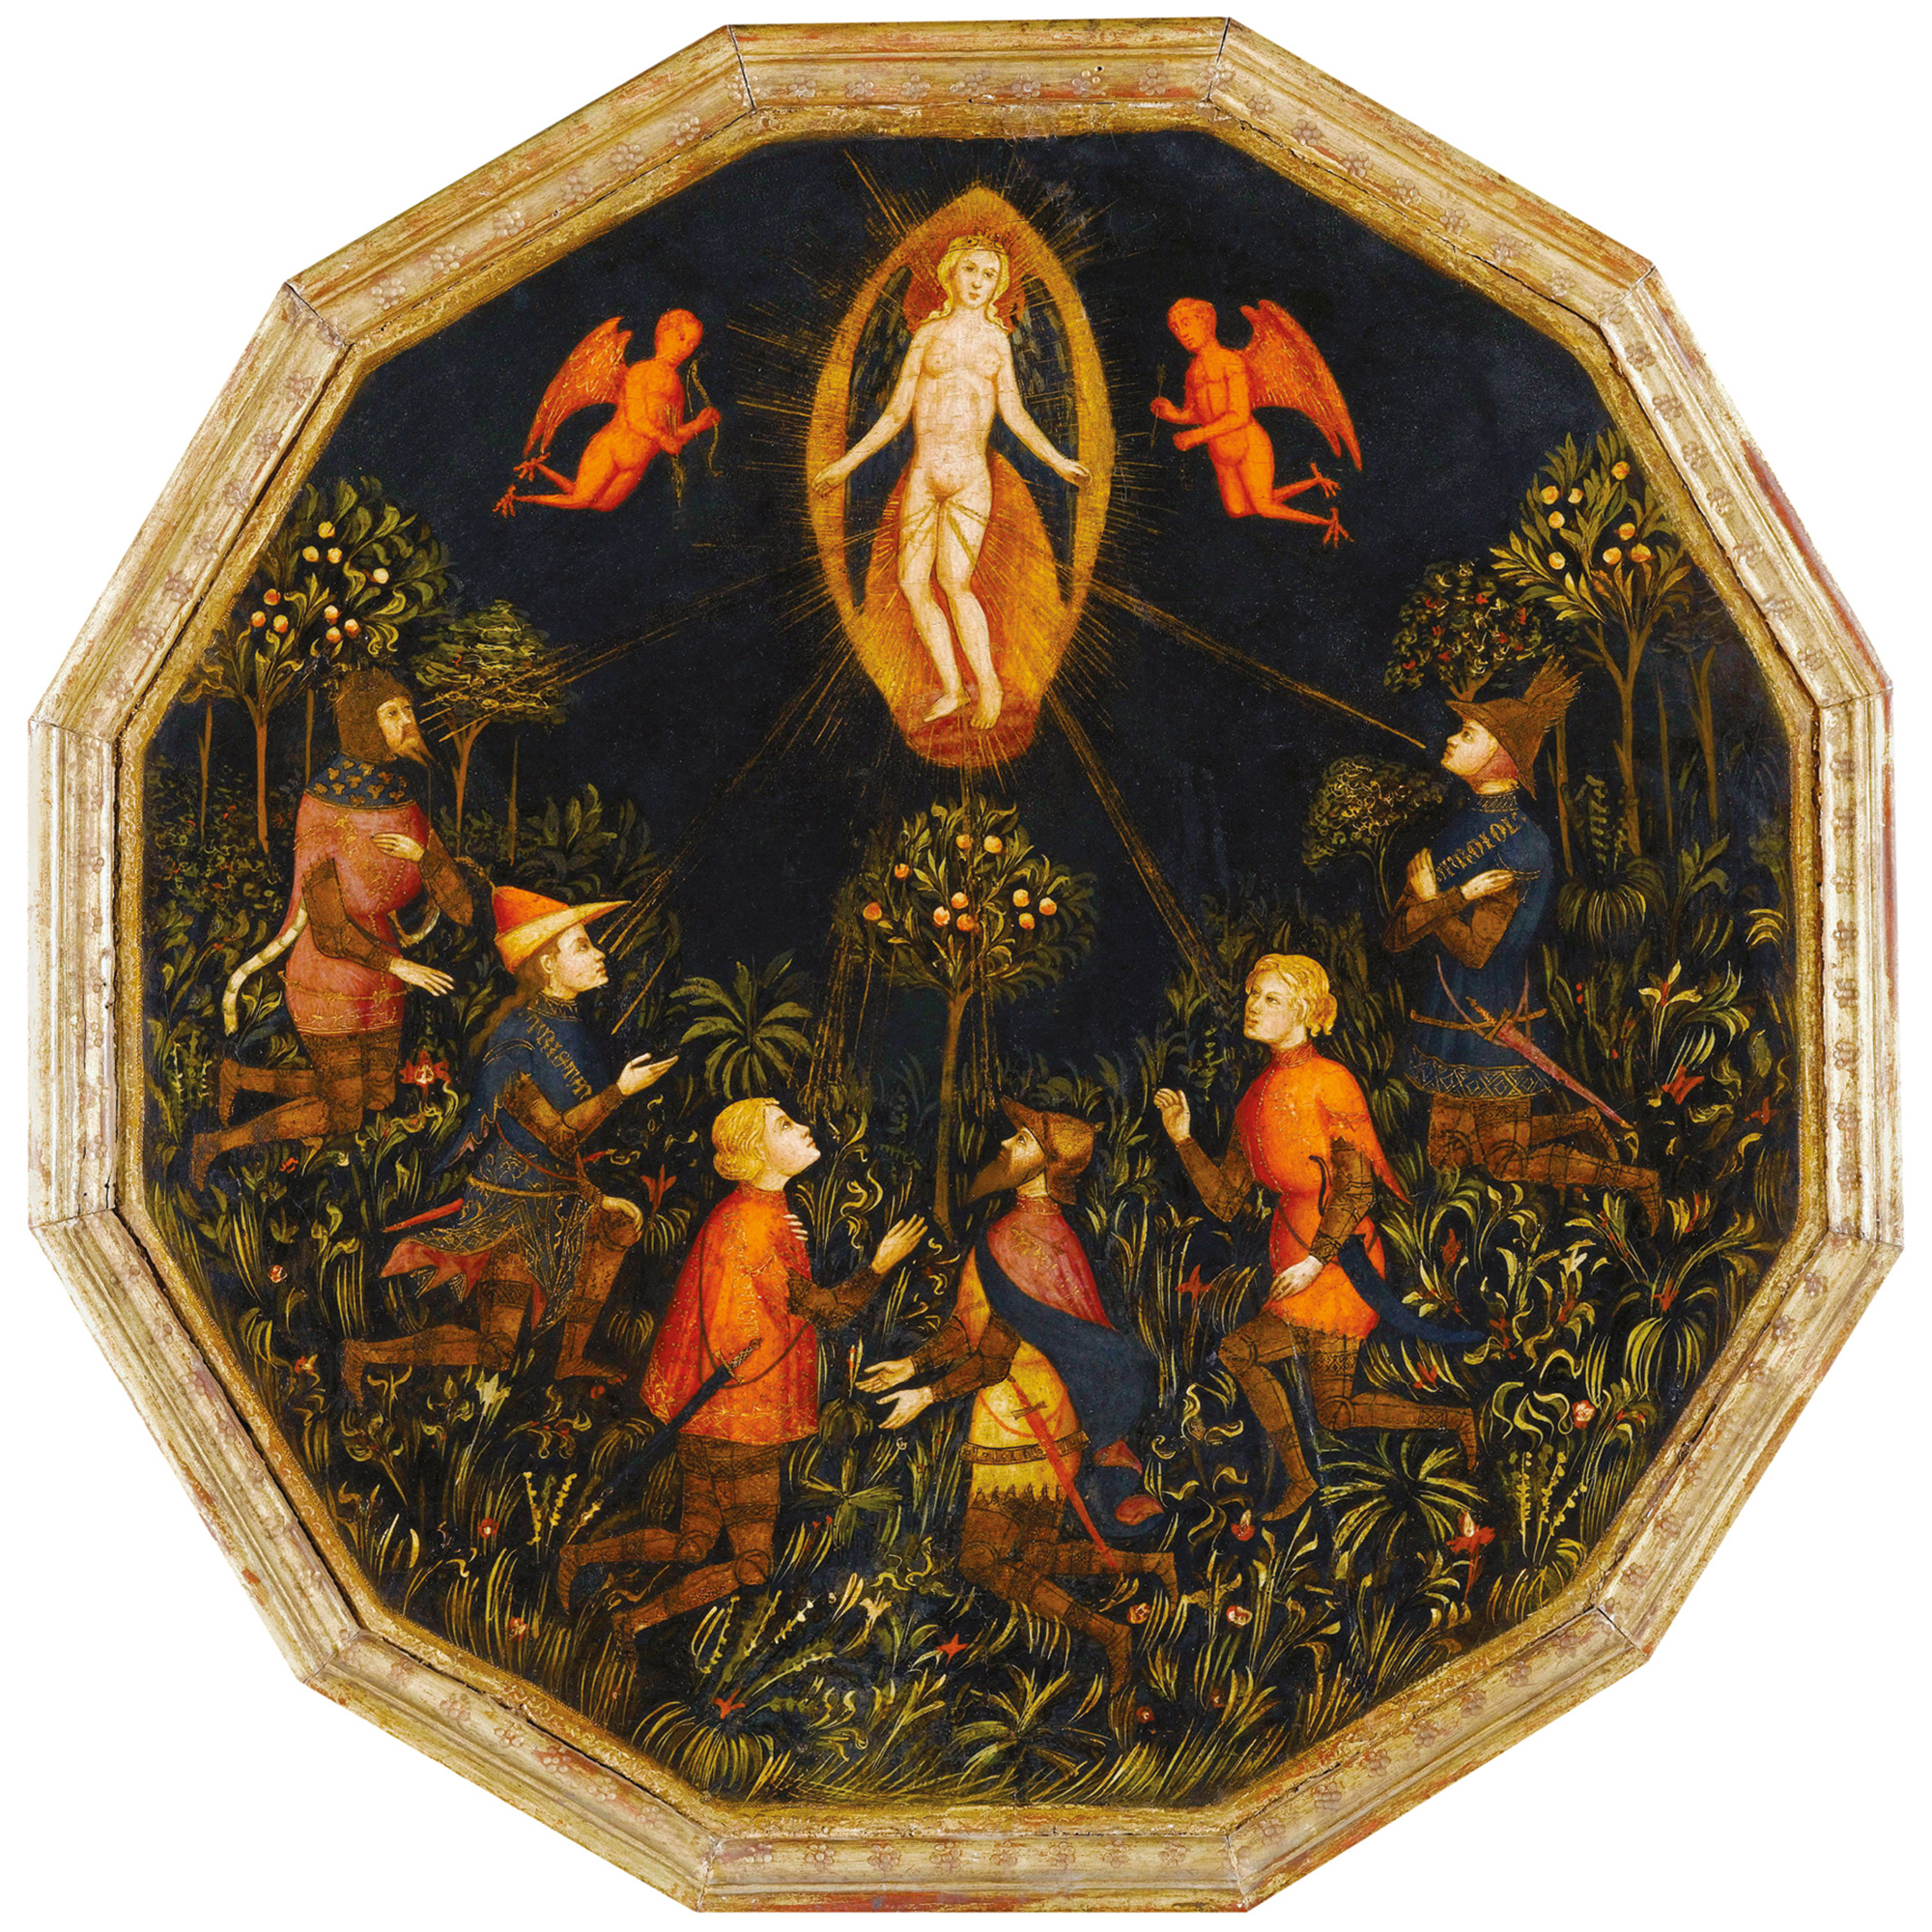 Venus radiant. Italian birth tray by Master of Charles of Durazzo, ca. 1400.